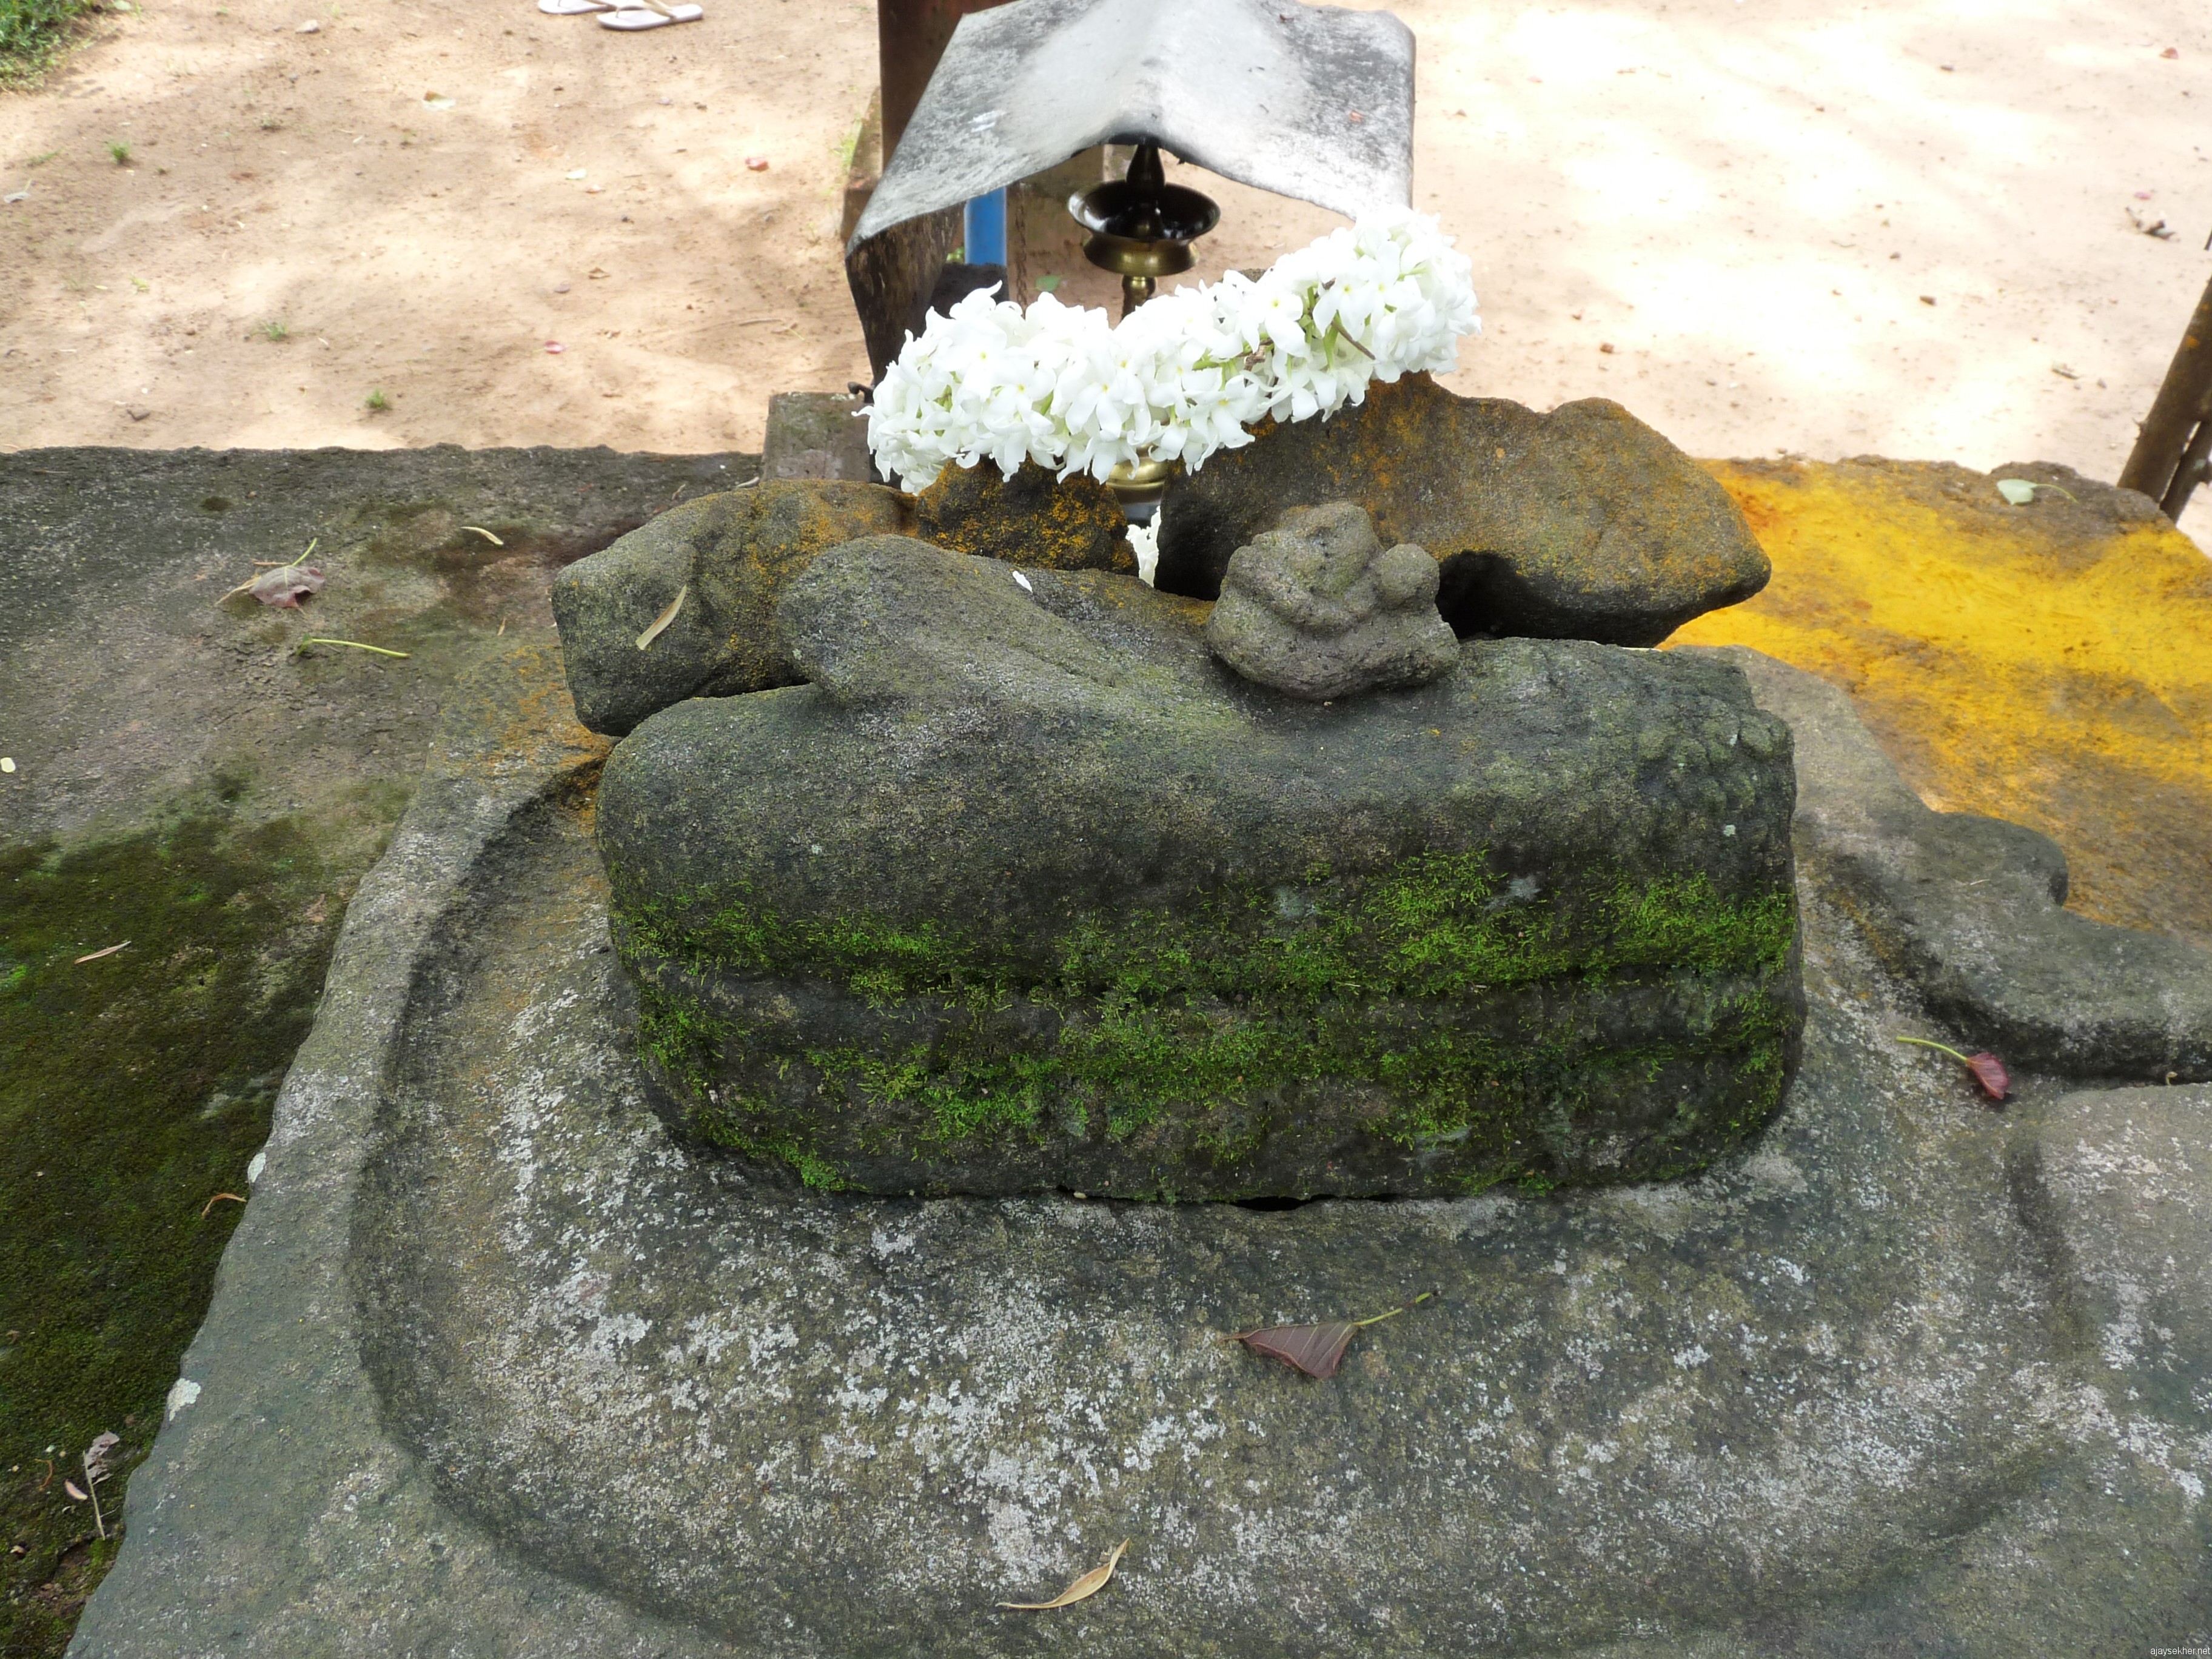 The pedestal and half-undone Padmasana idol